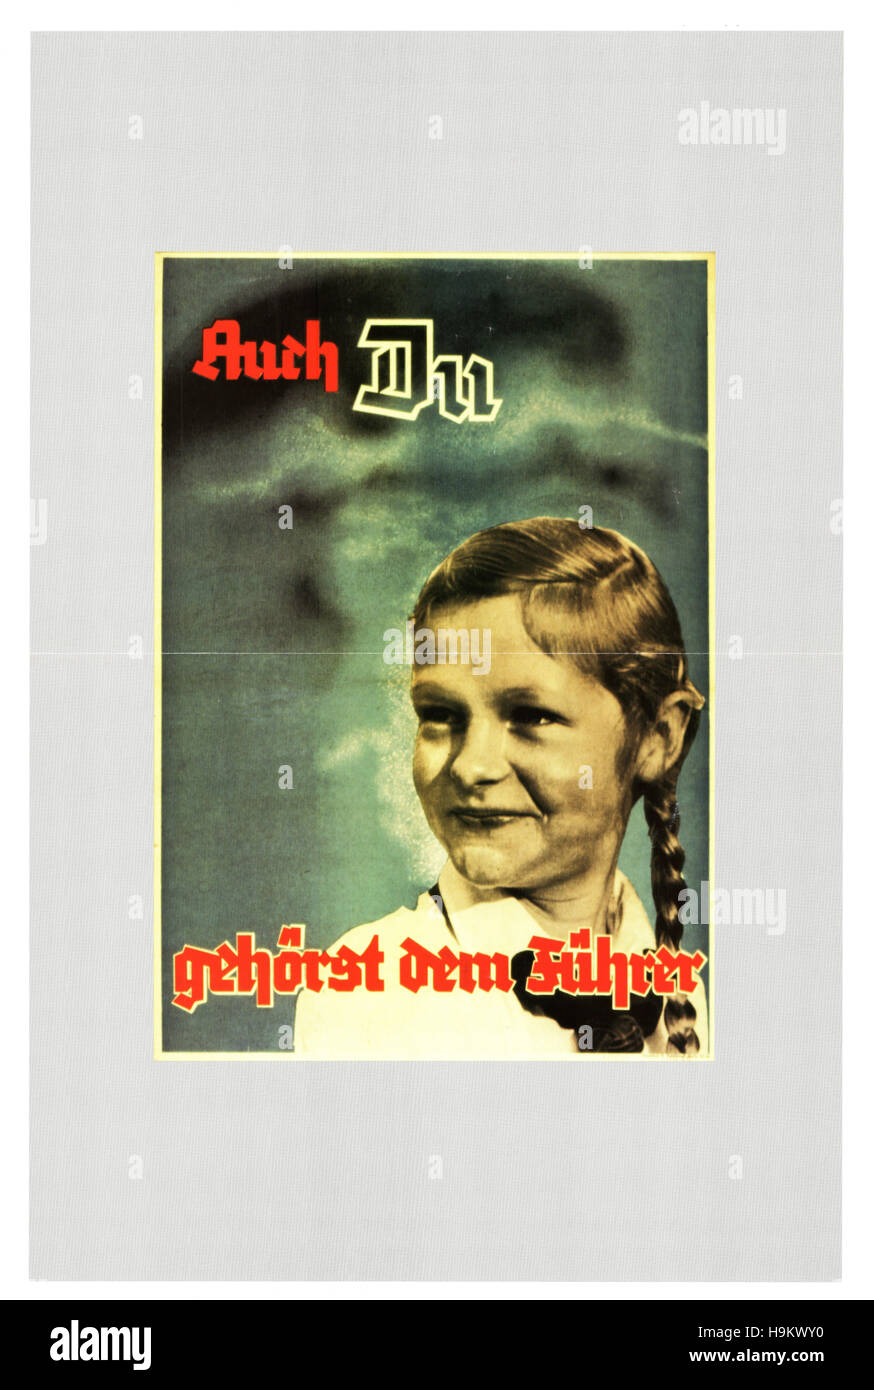 Póster de la Juventud de Hitler de 1937 Foto de stock